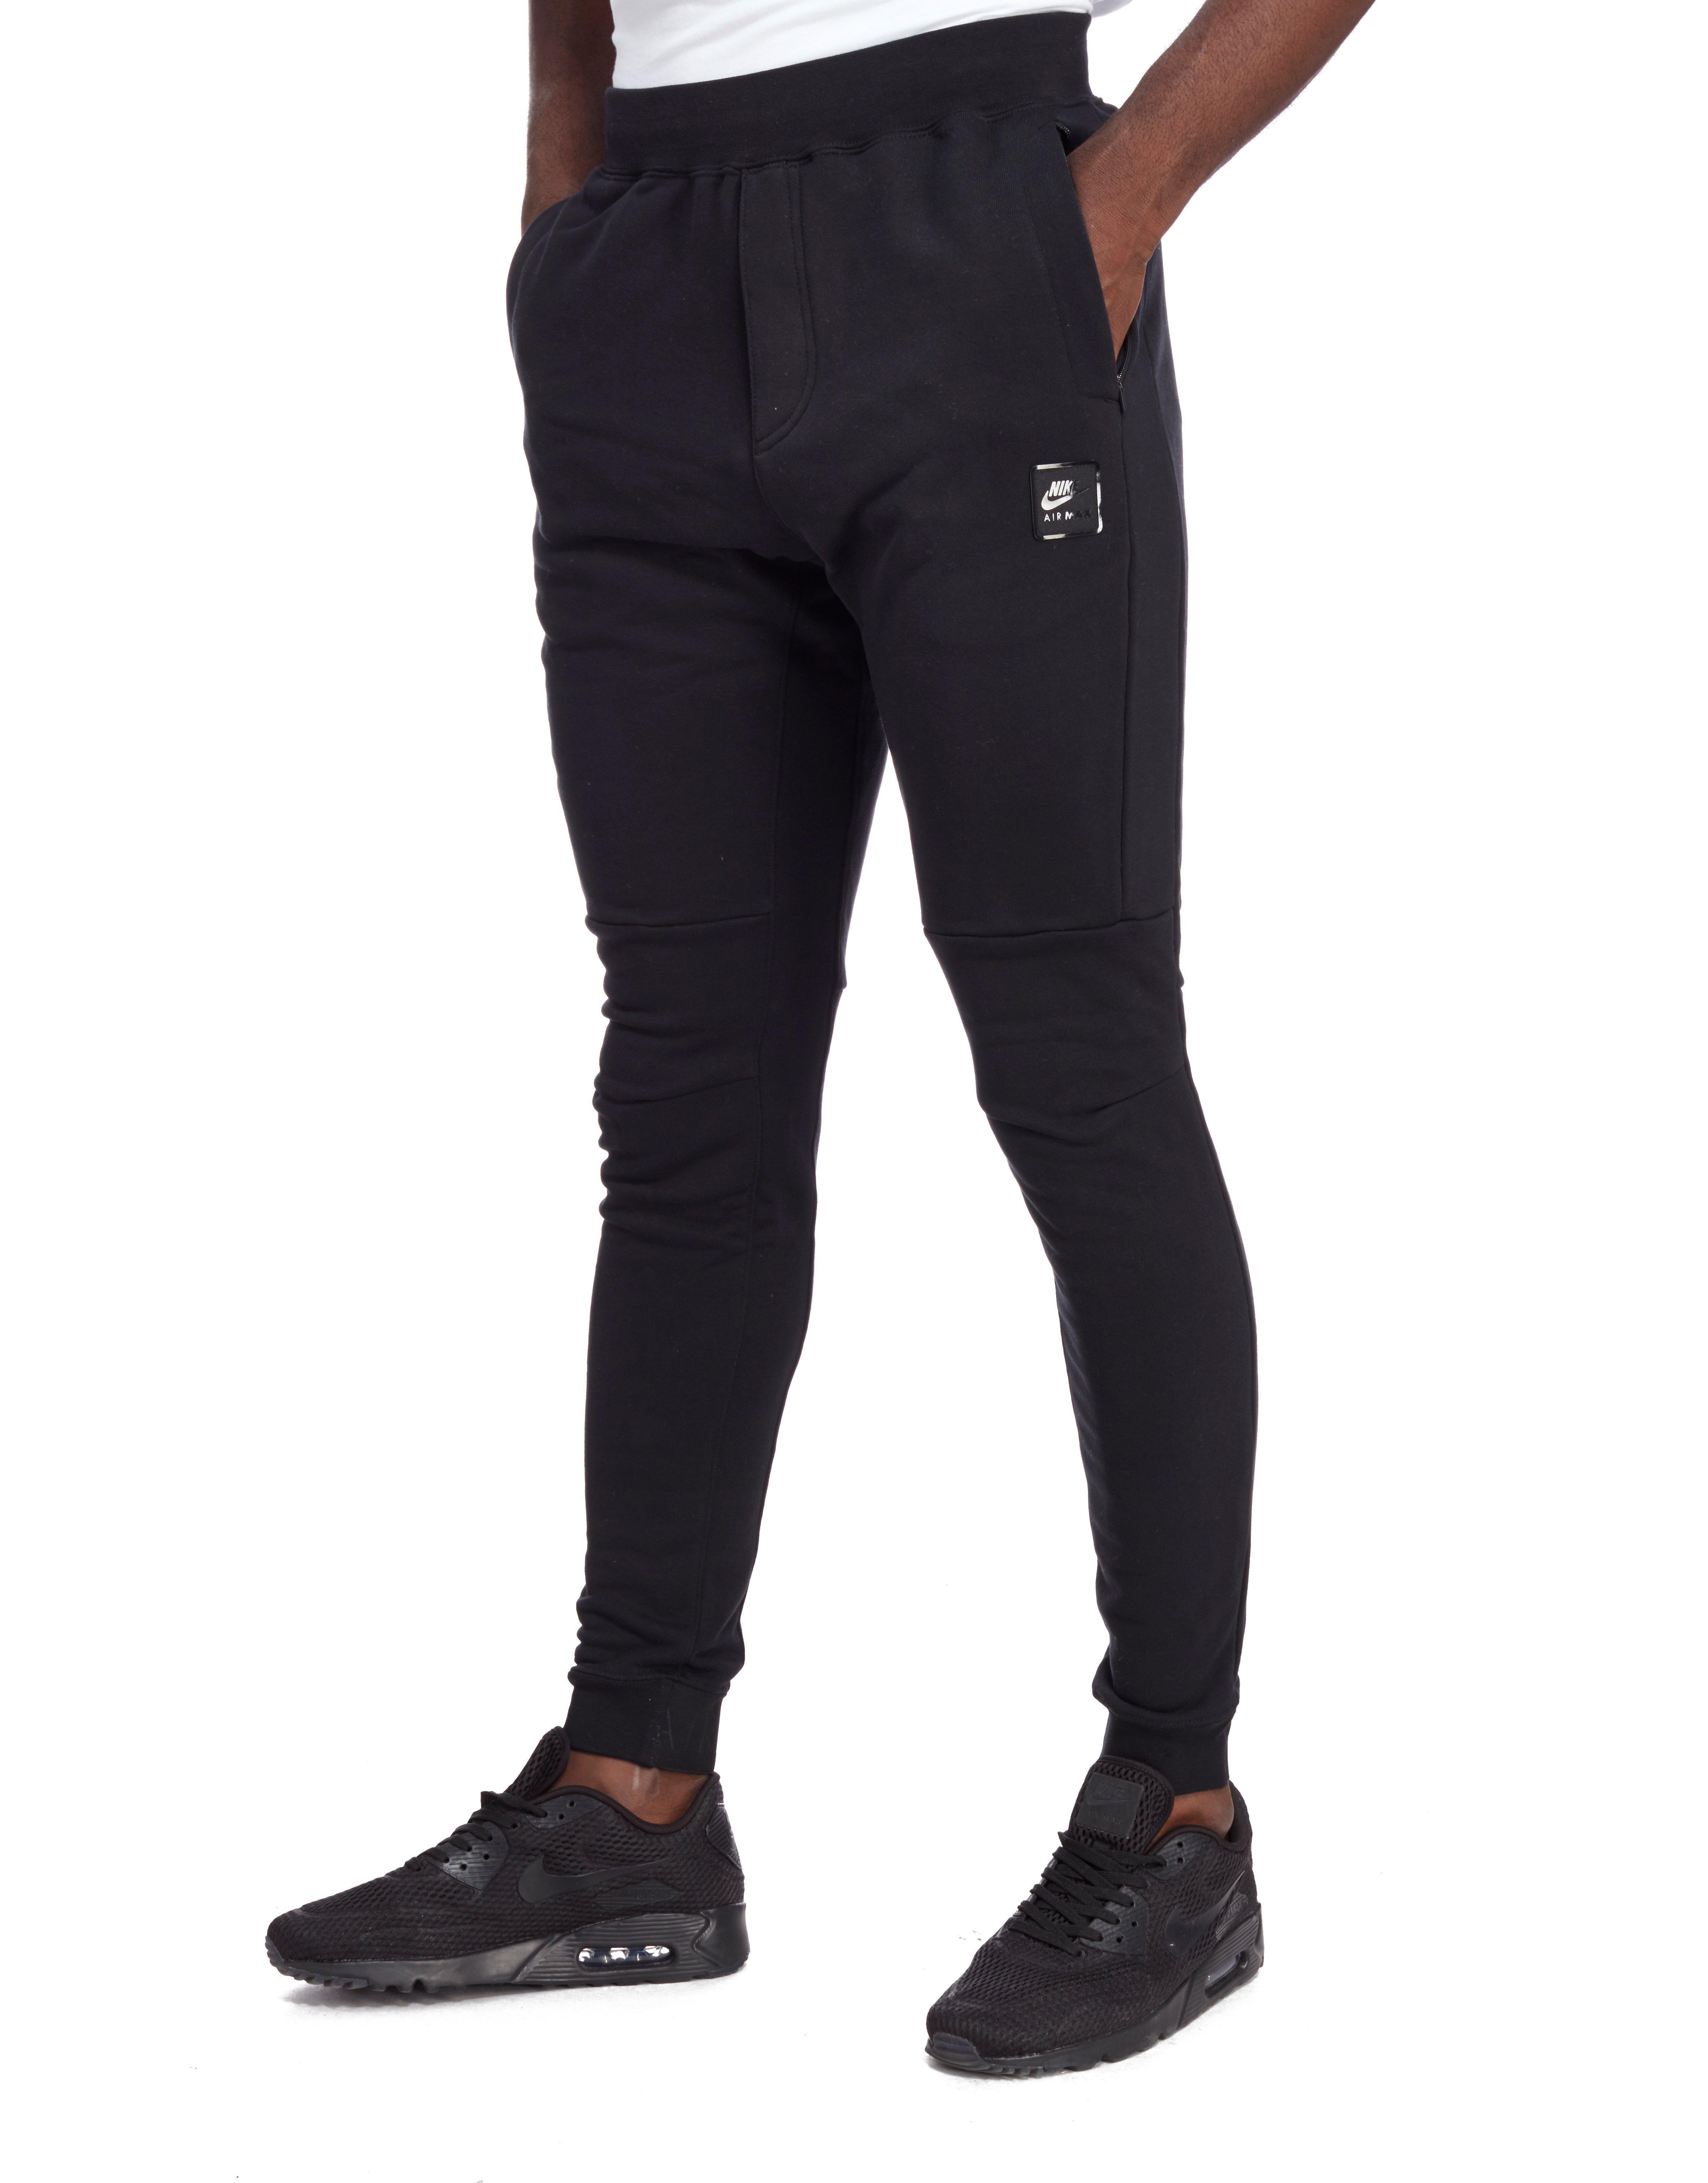 Nike Air Max Fleece Pants in Black for 